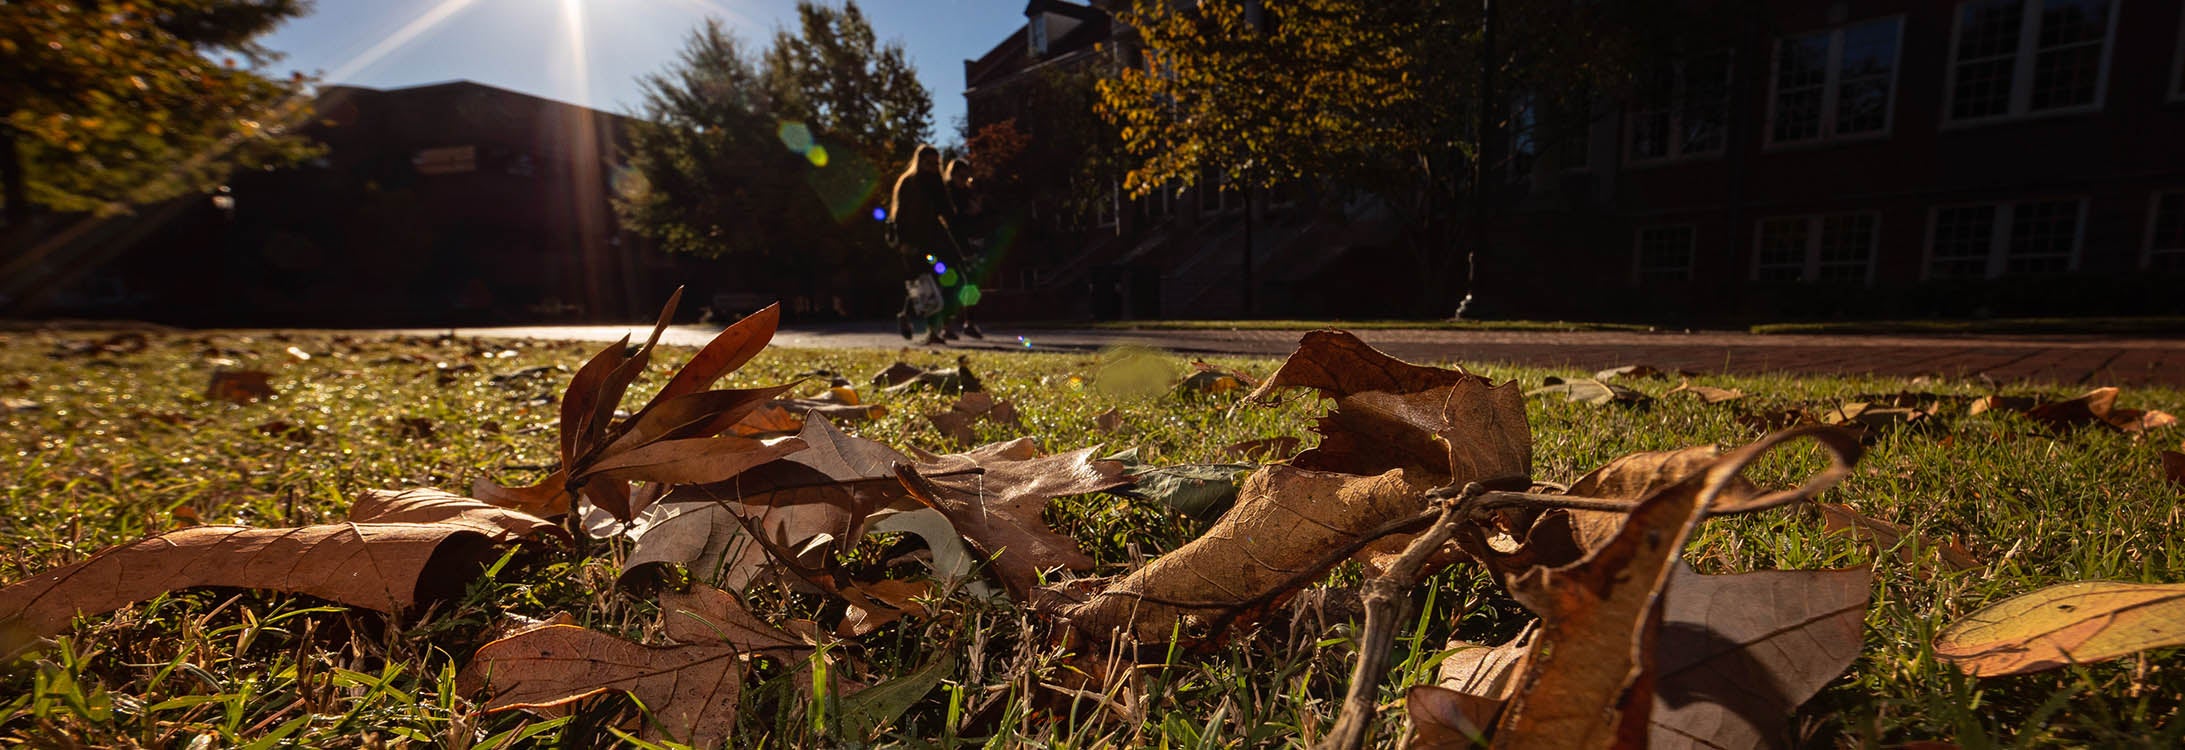 Fallen leaves on ECU's campus